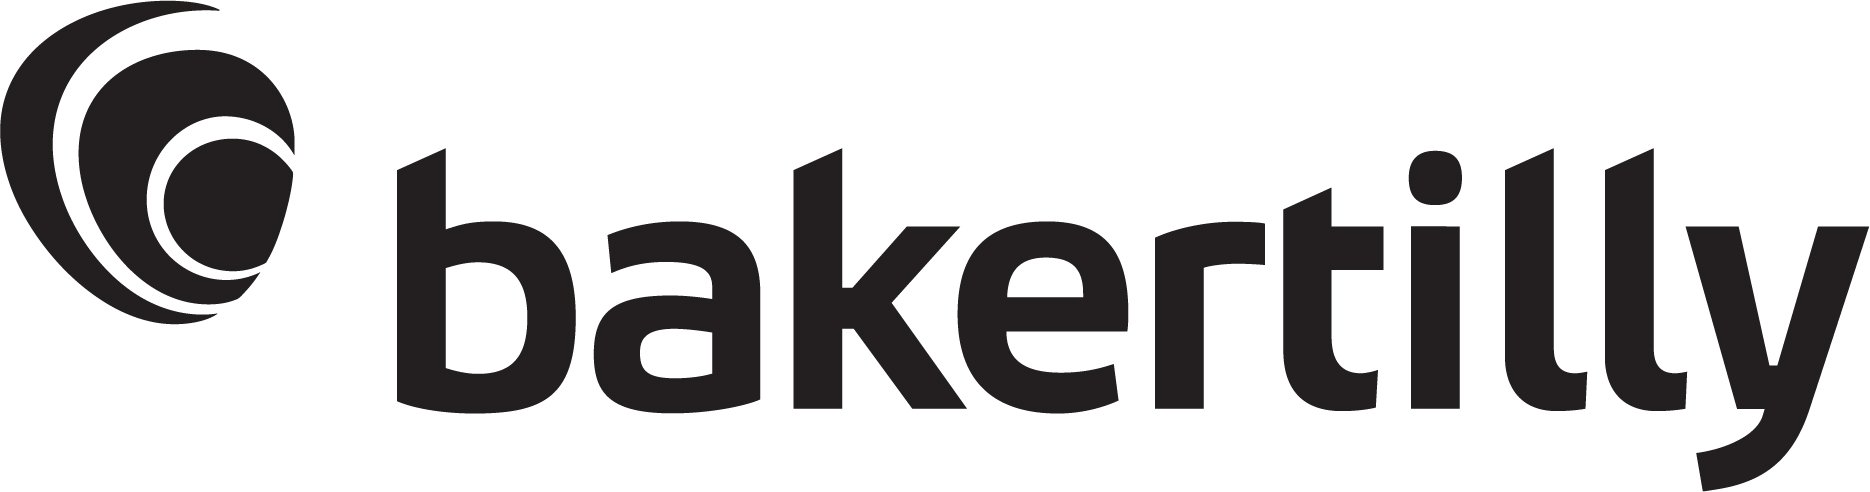 Baker_Tilly_Logo_Black_RGB_JPEG.jpg